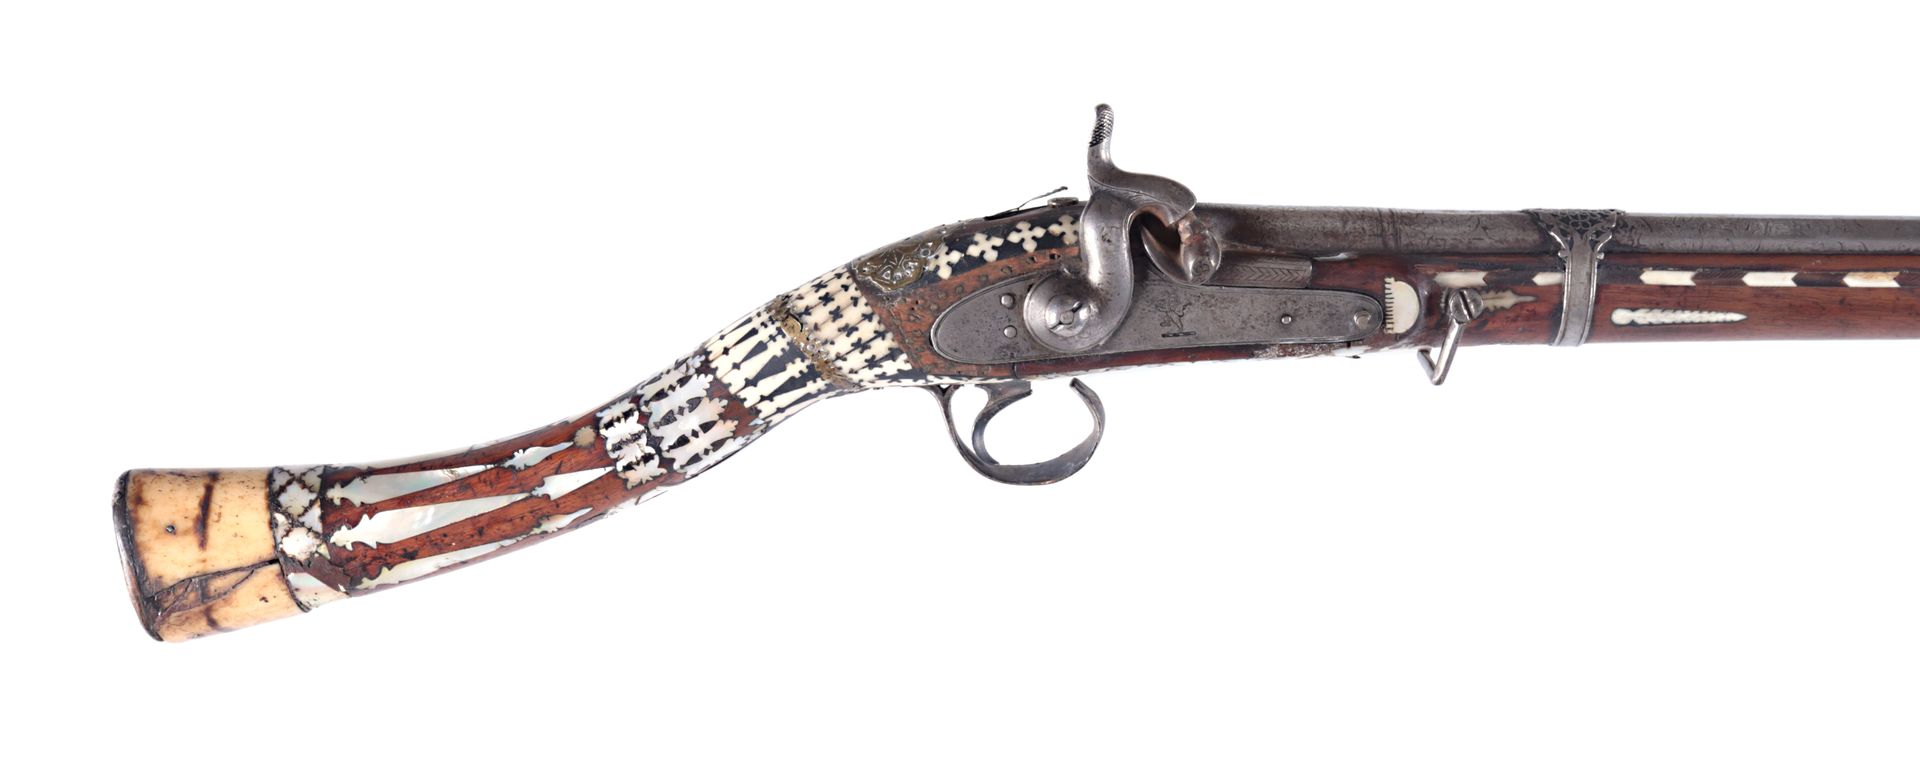 A Georgian Percussion Rifle, ca. 1850 A Georgian Percussion Rifle, ca. 1850
The &hellip;